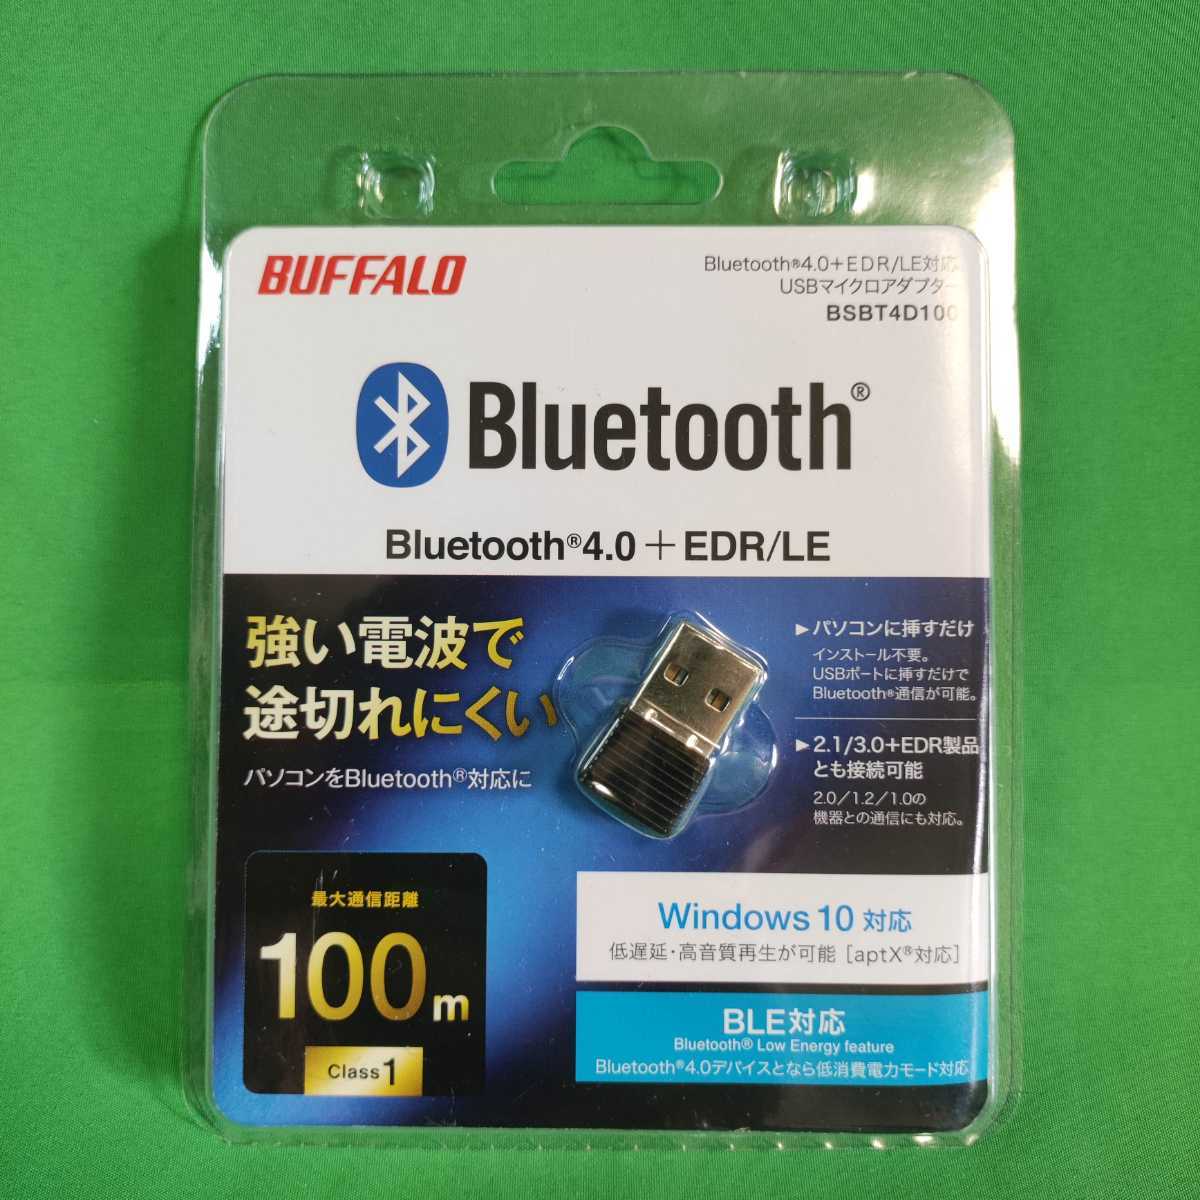 BUFFALO Bluetooth4.0 Class1対応 USBアダプタ